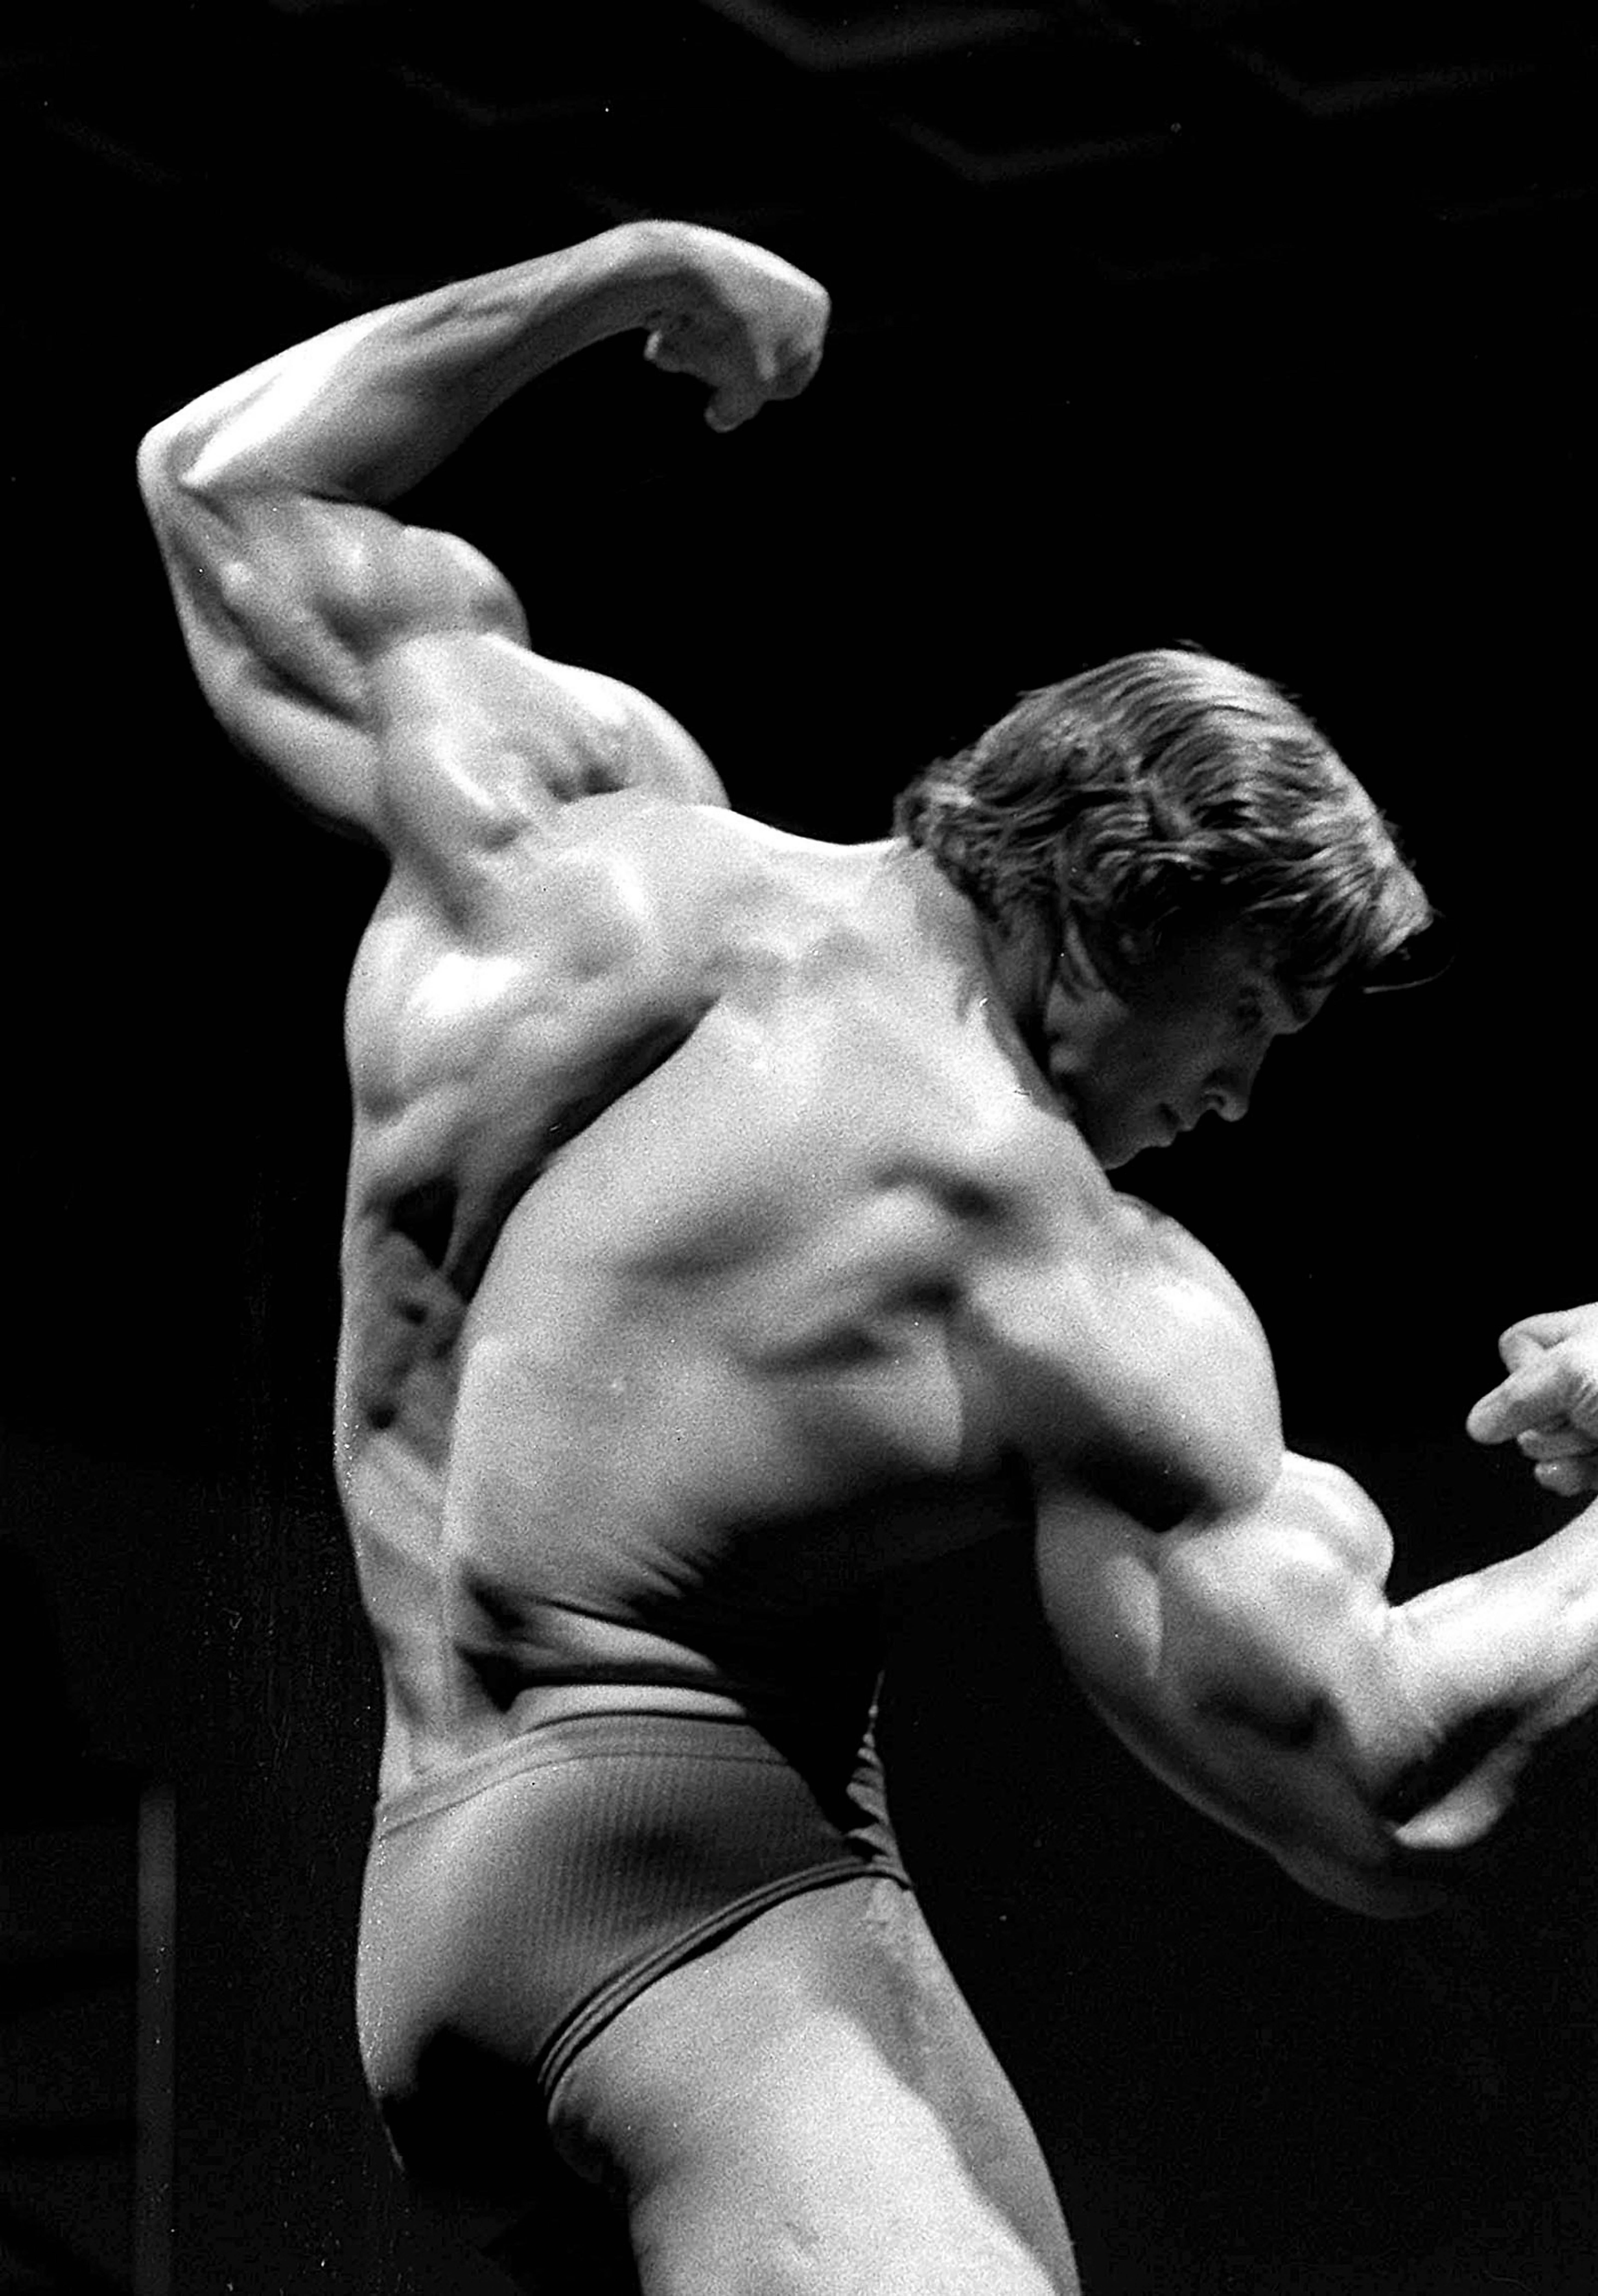 Arthur Gordon Black and White Photograph - Arnold Schwarzenegger Bodybuilder Pose Fine Art Print